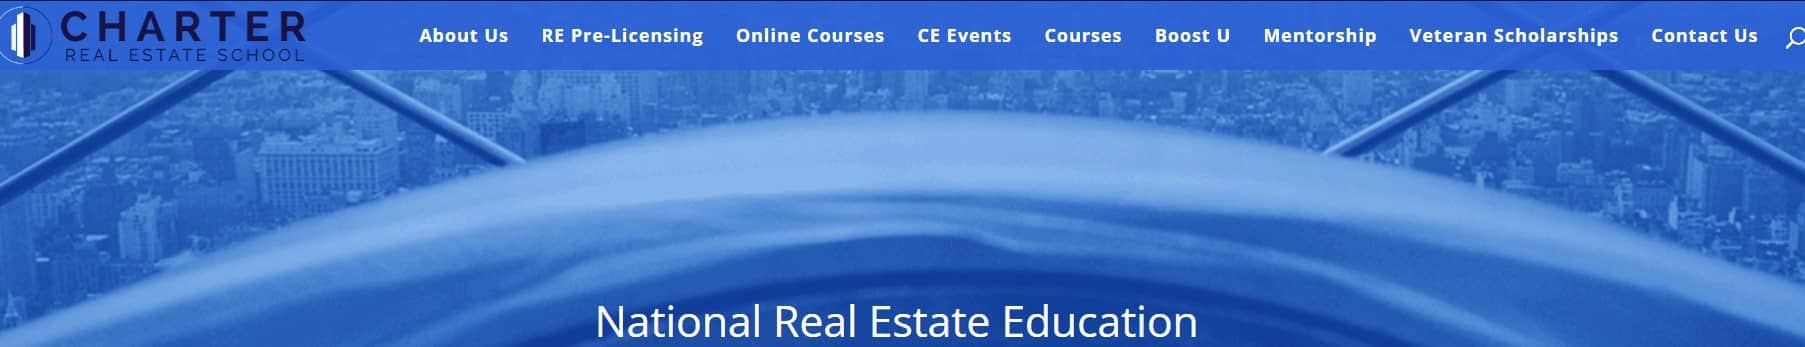 Charter real estate school